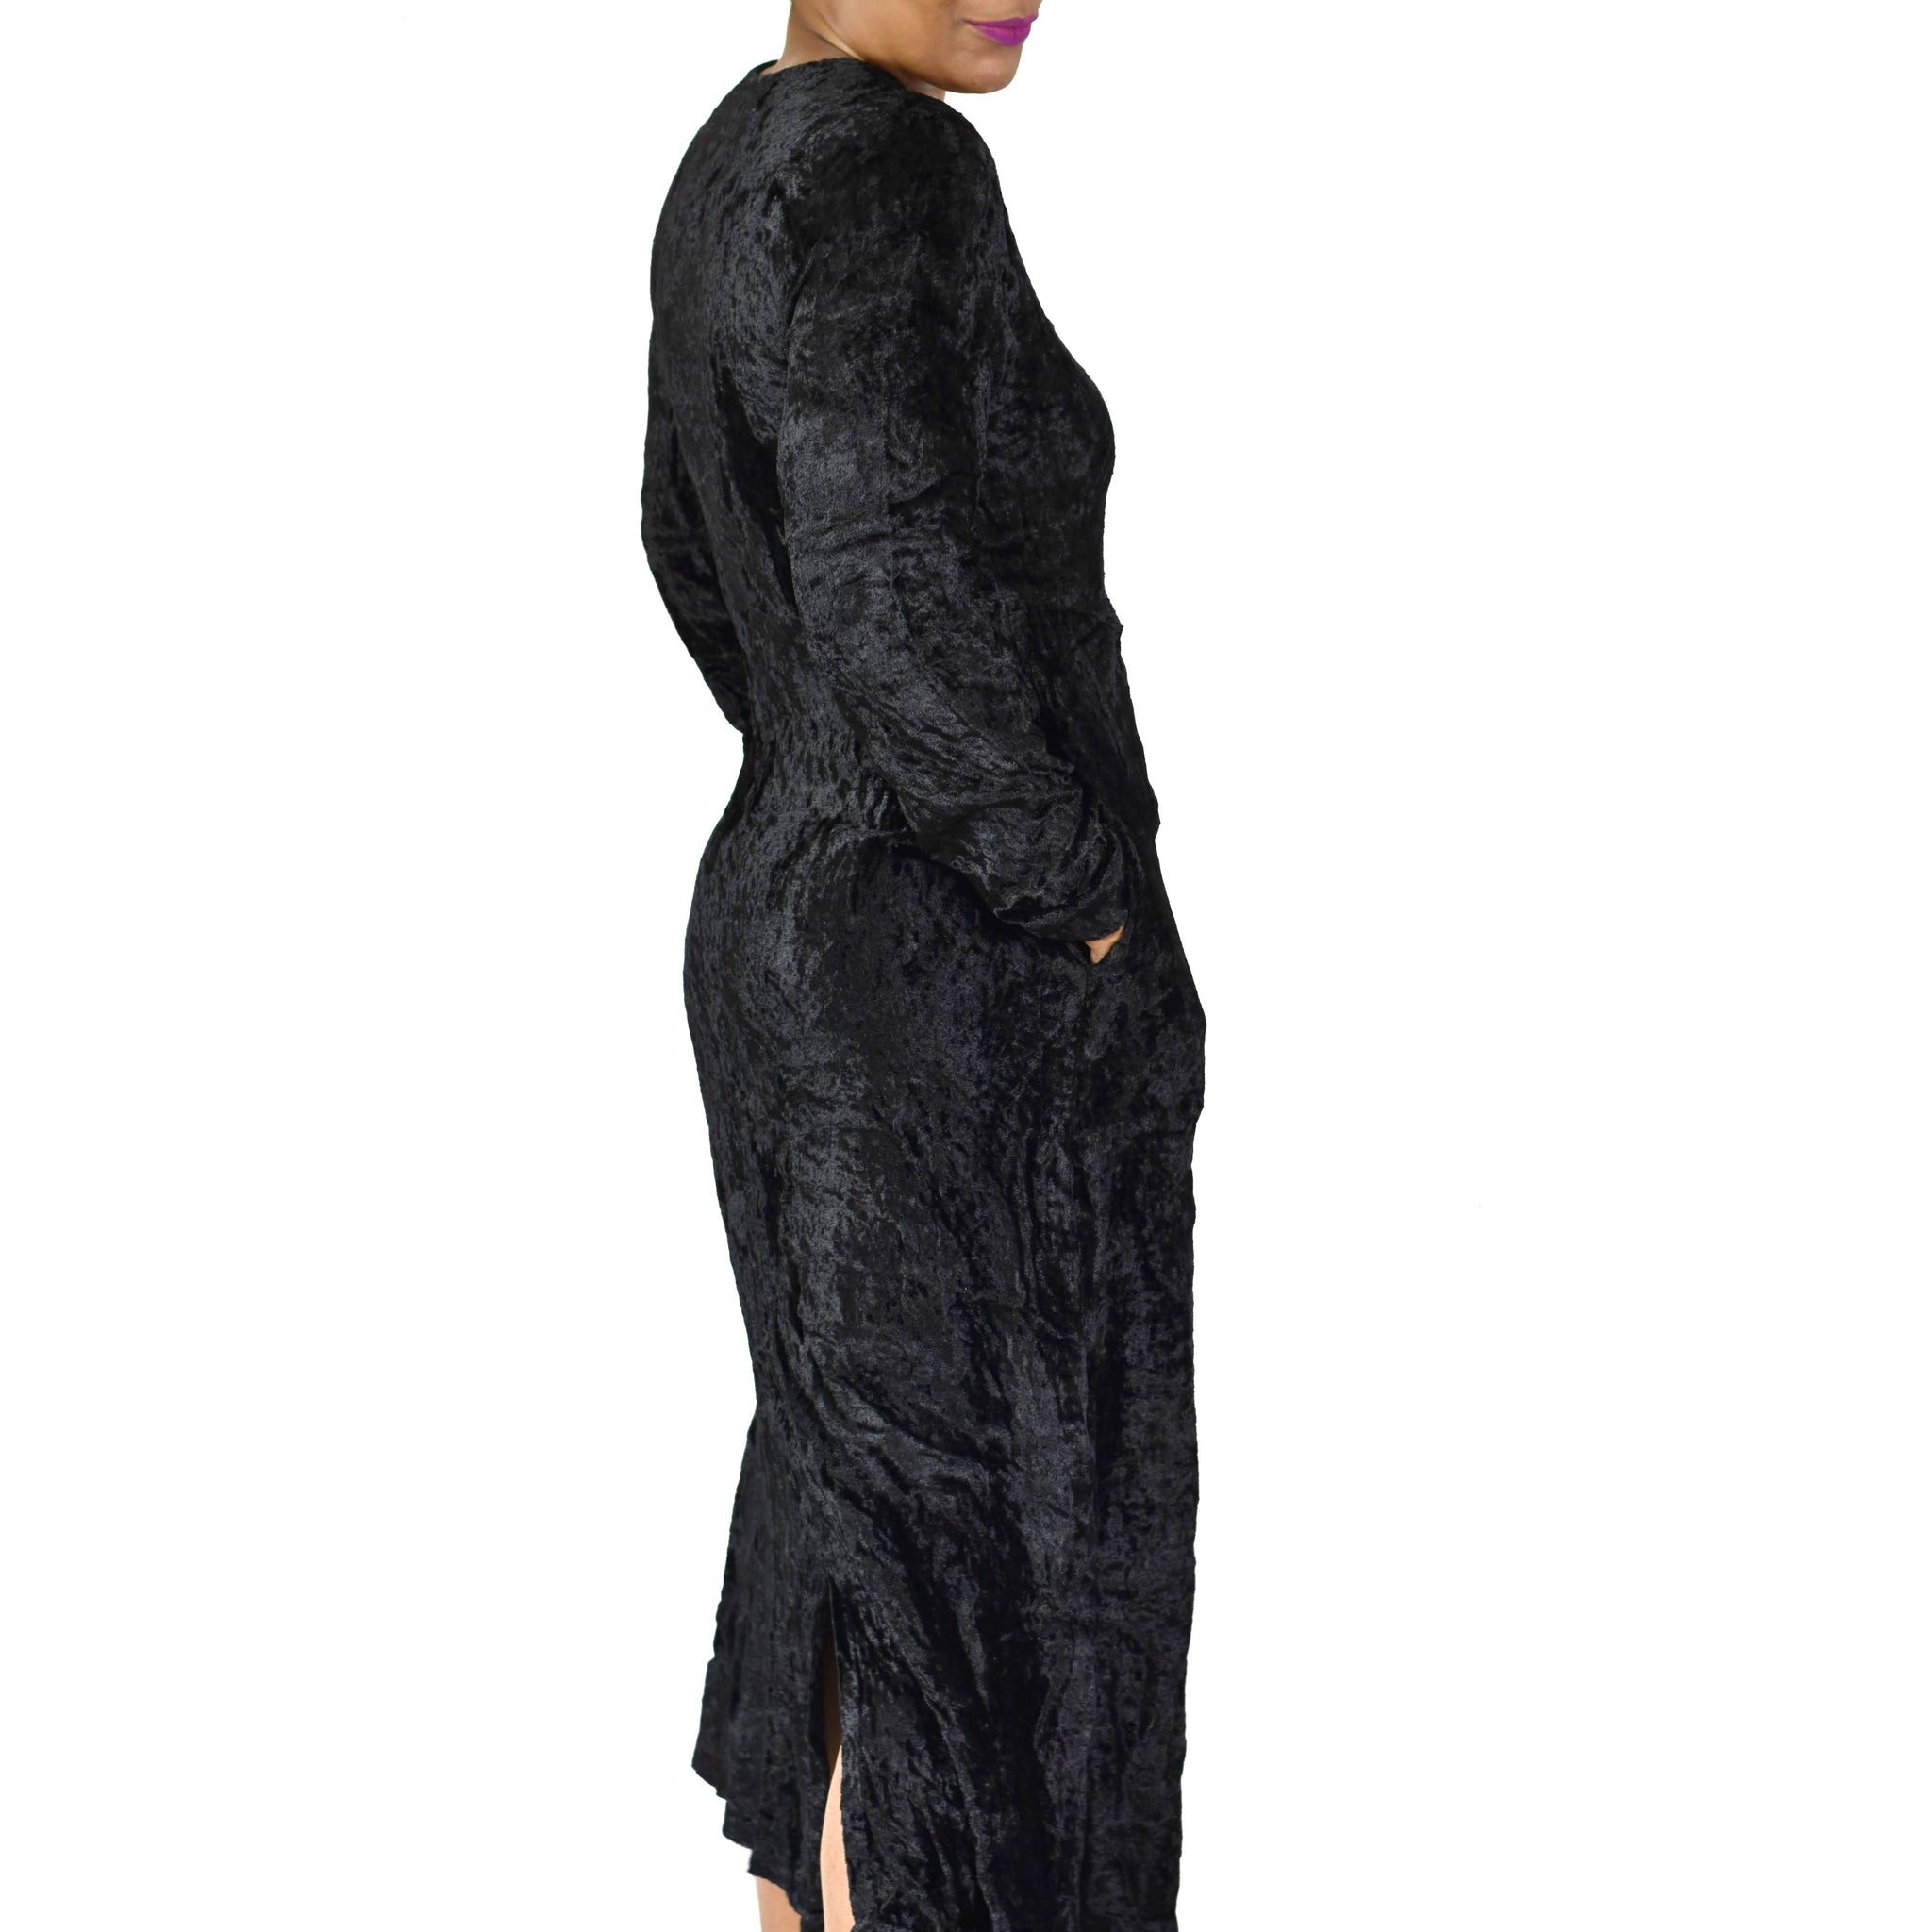 Vintage Adini Black Velvet Dress Size Small